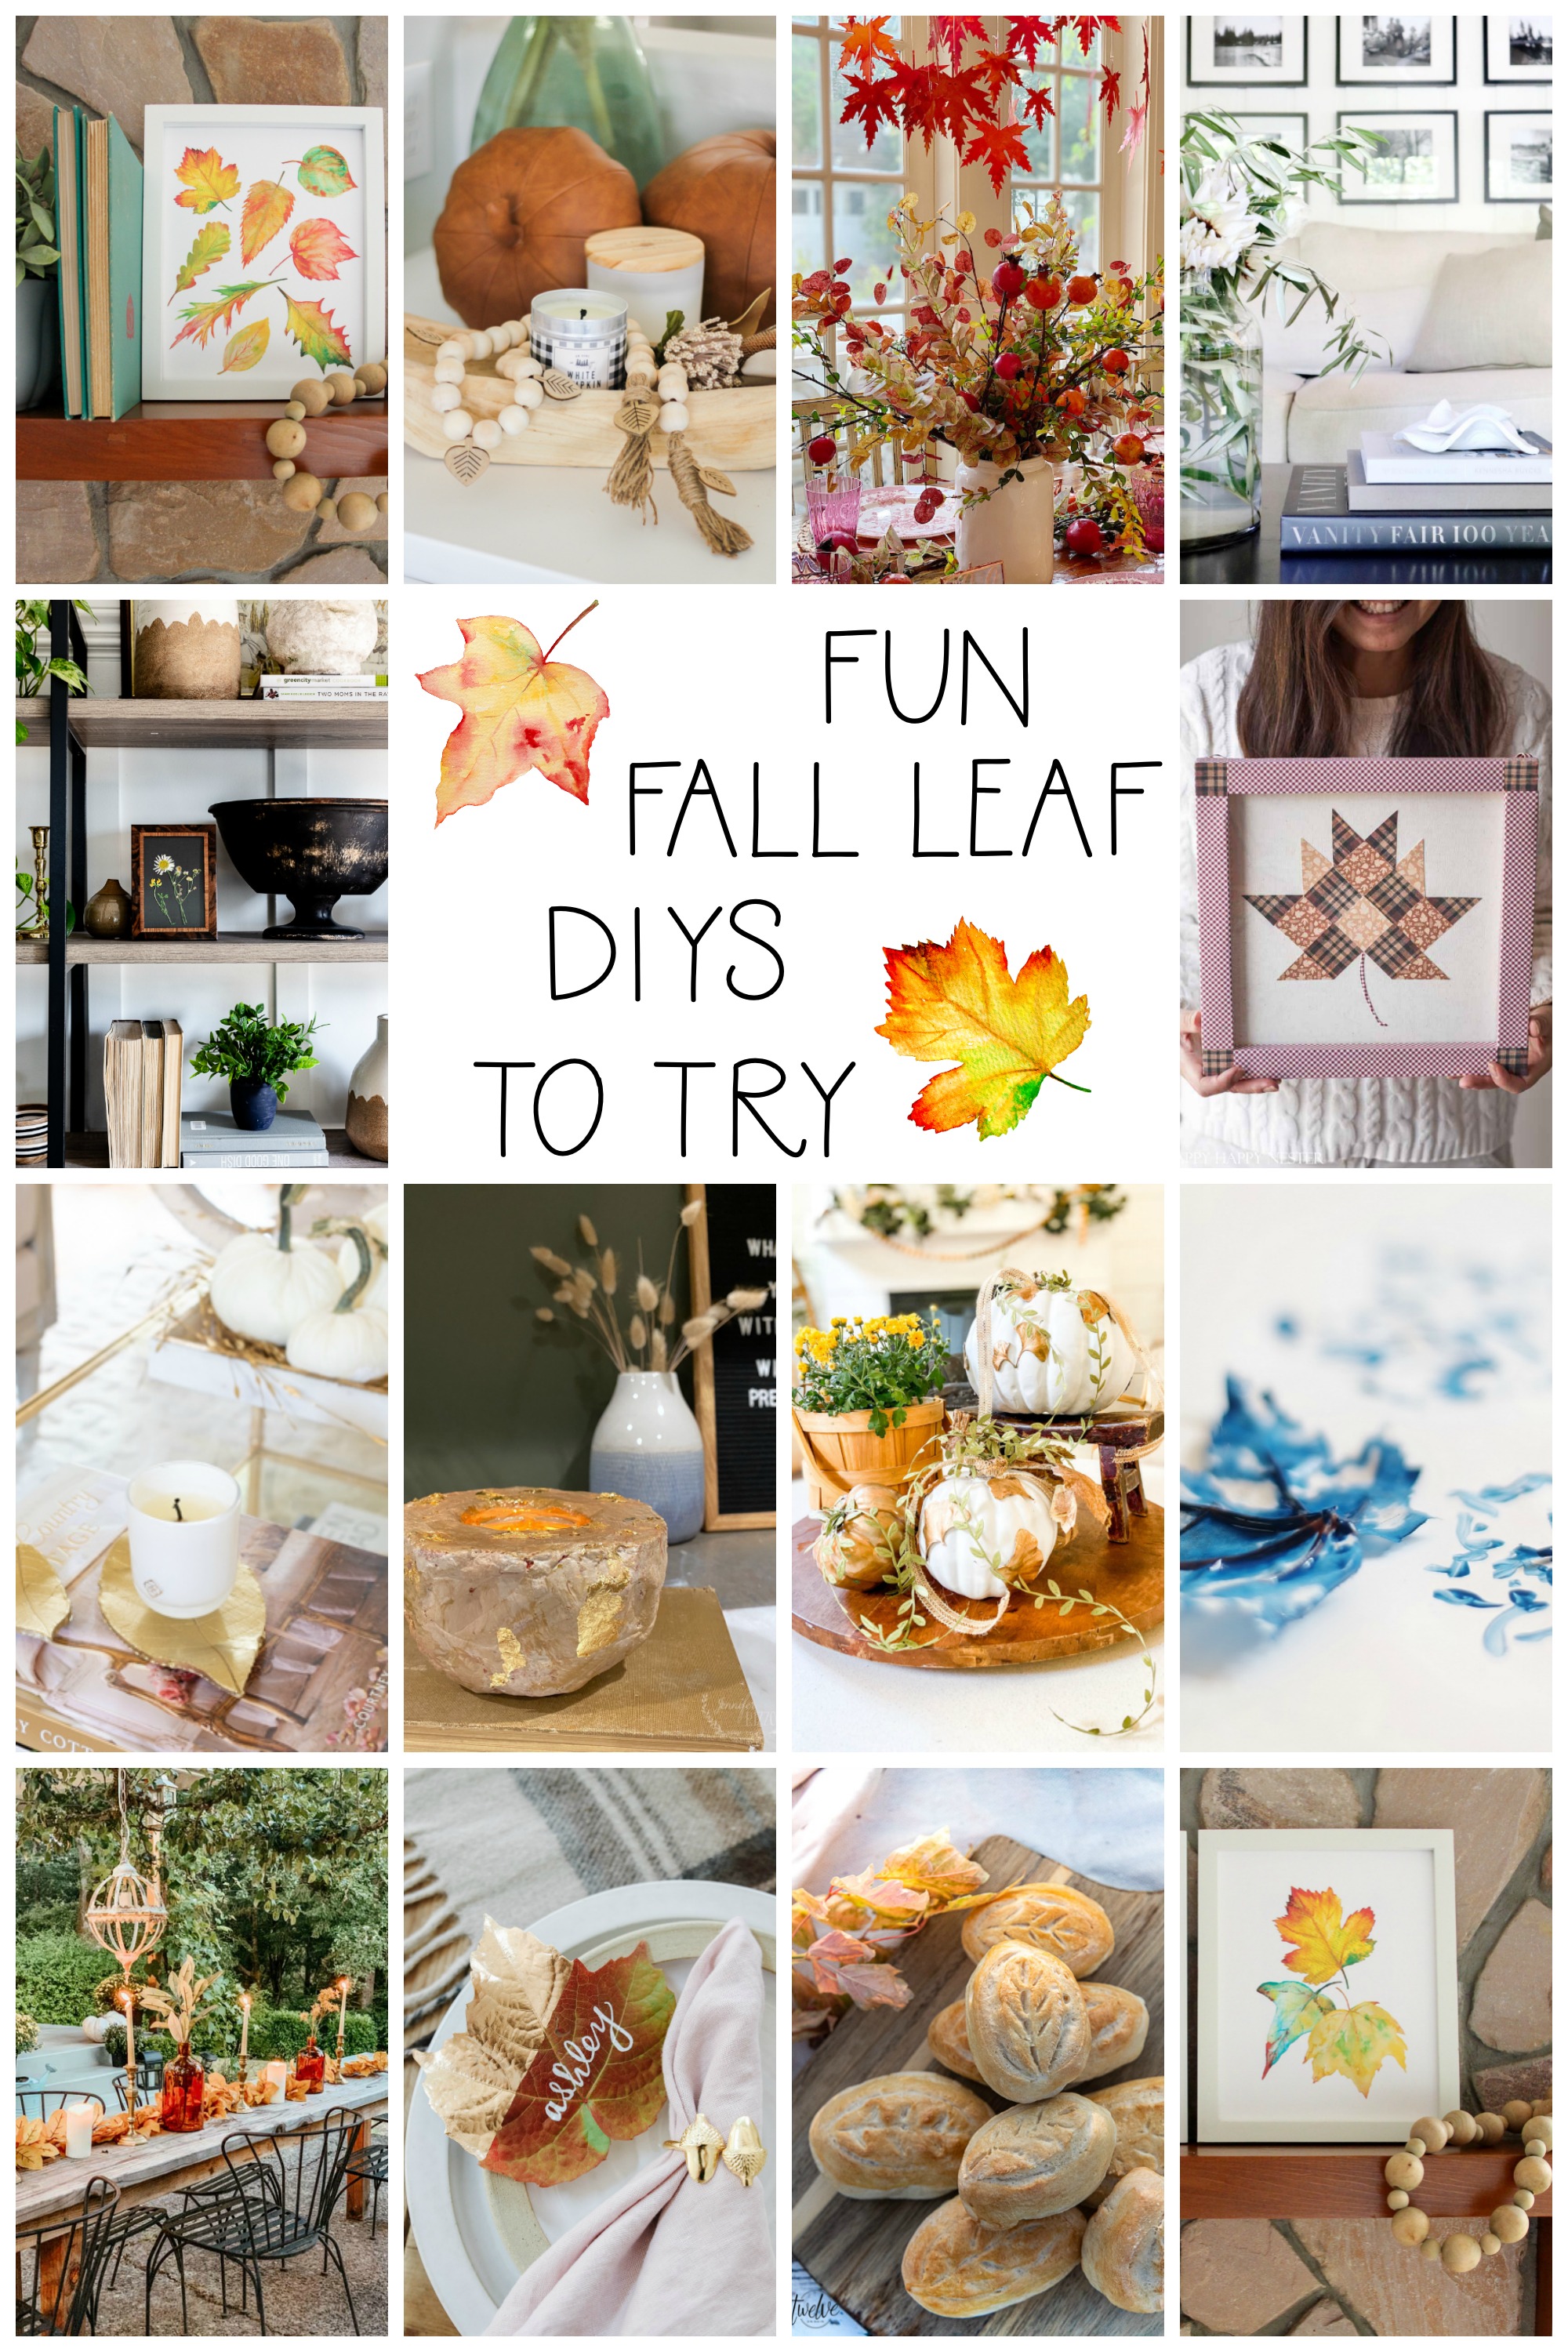 Fun Fall Leaf DIYS To Try poster.